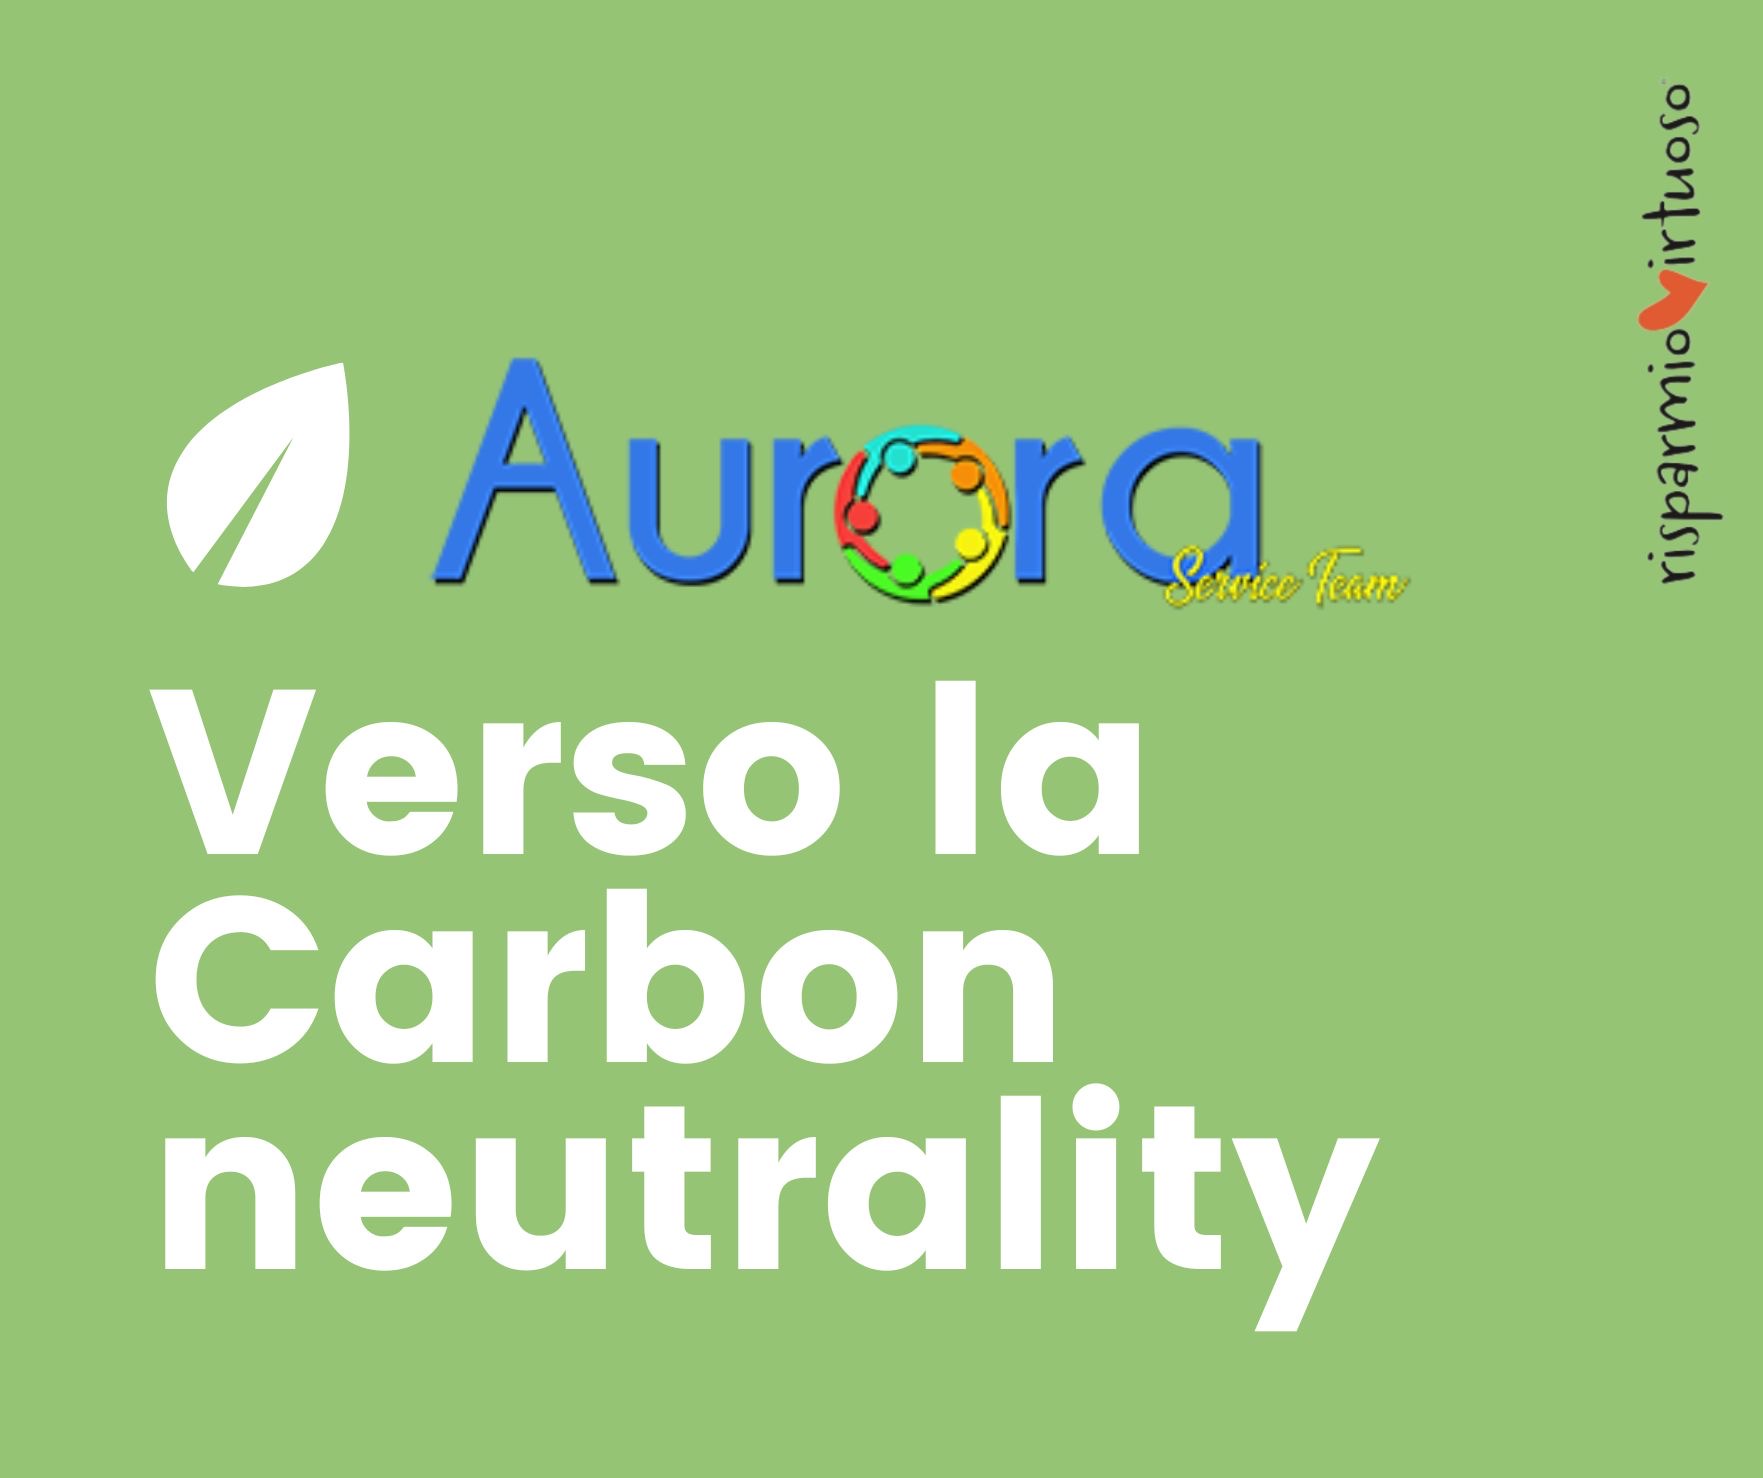 Aurora verso la Carbon Neutrality